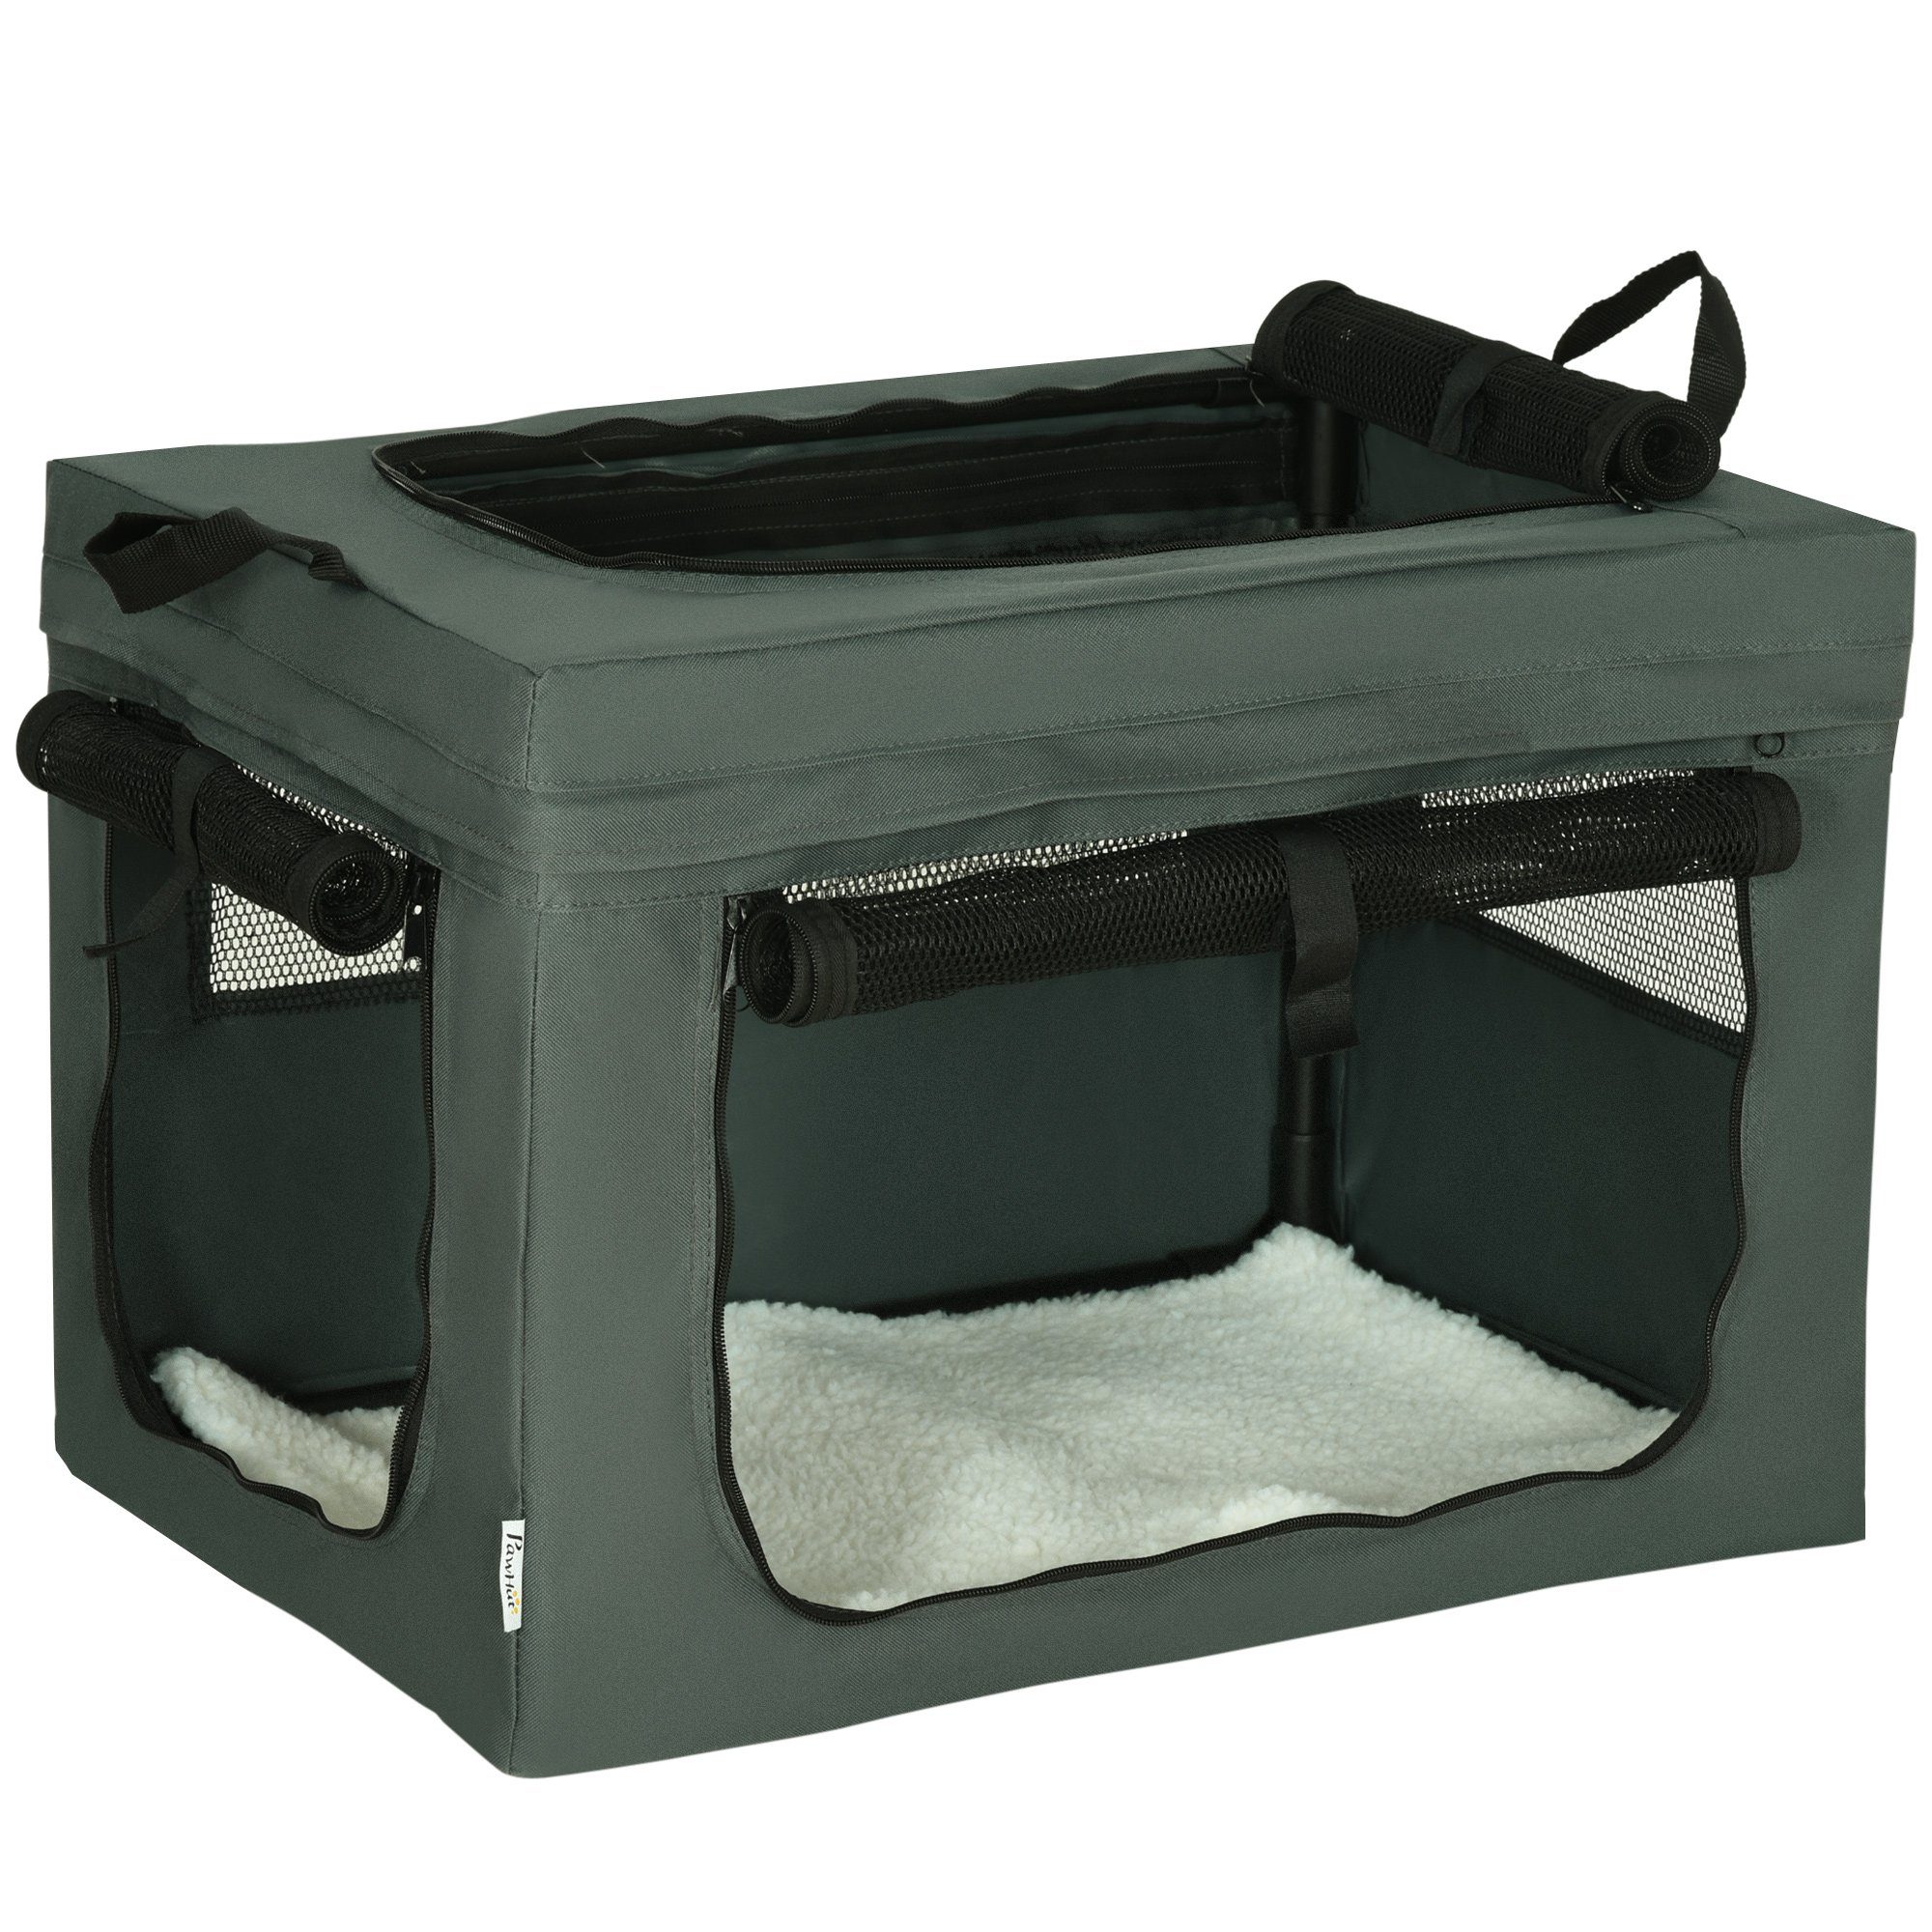 PawHut Tiertransportbox Hundebox, Transporttasche für Hunde bis 4 kg, Oxford, Grau bis 4 kg, 60L x 42B x 42H cm